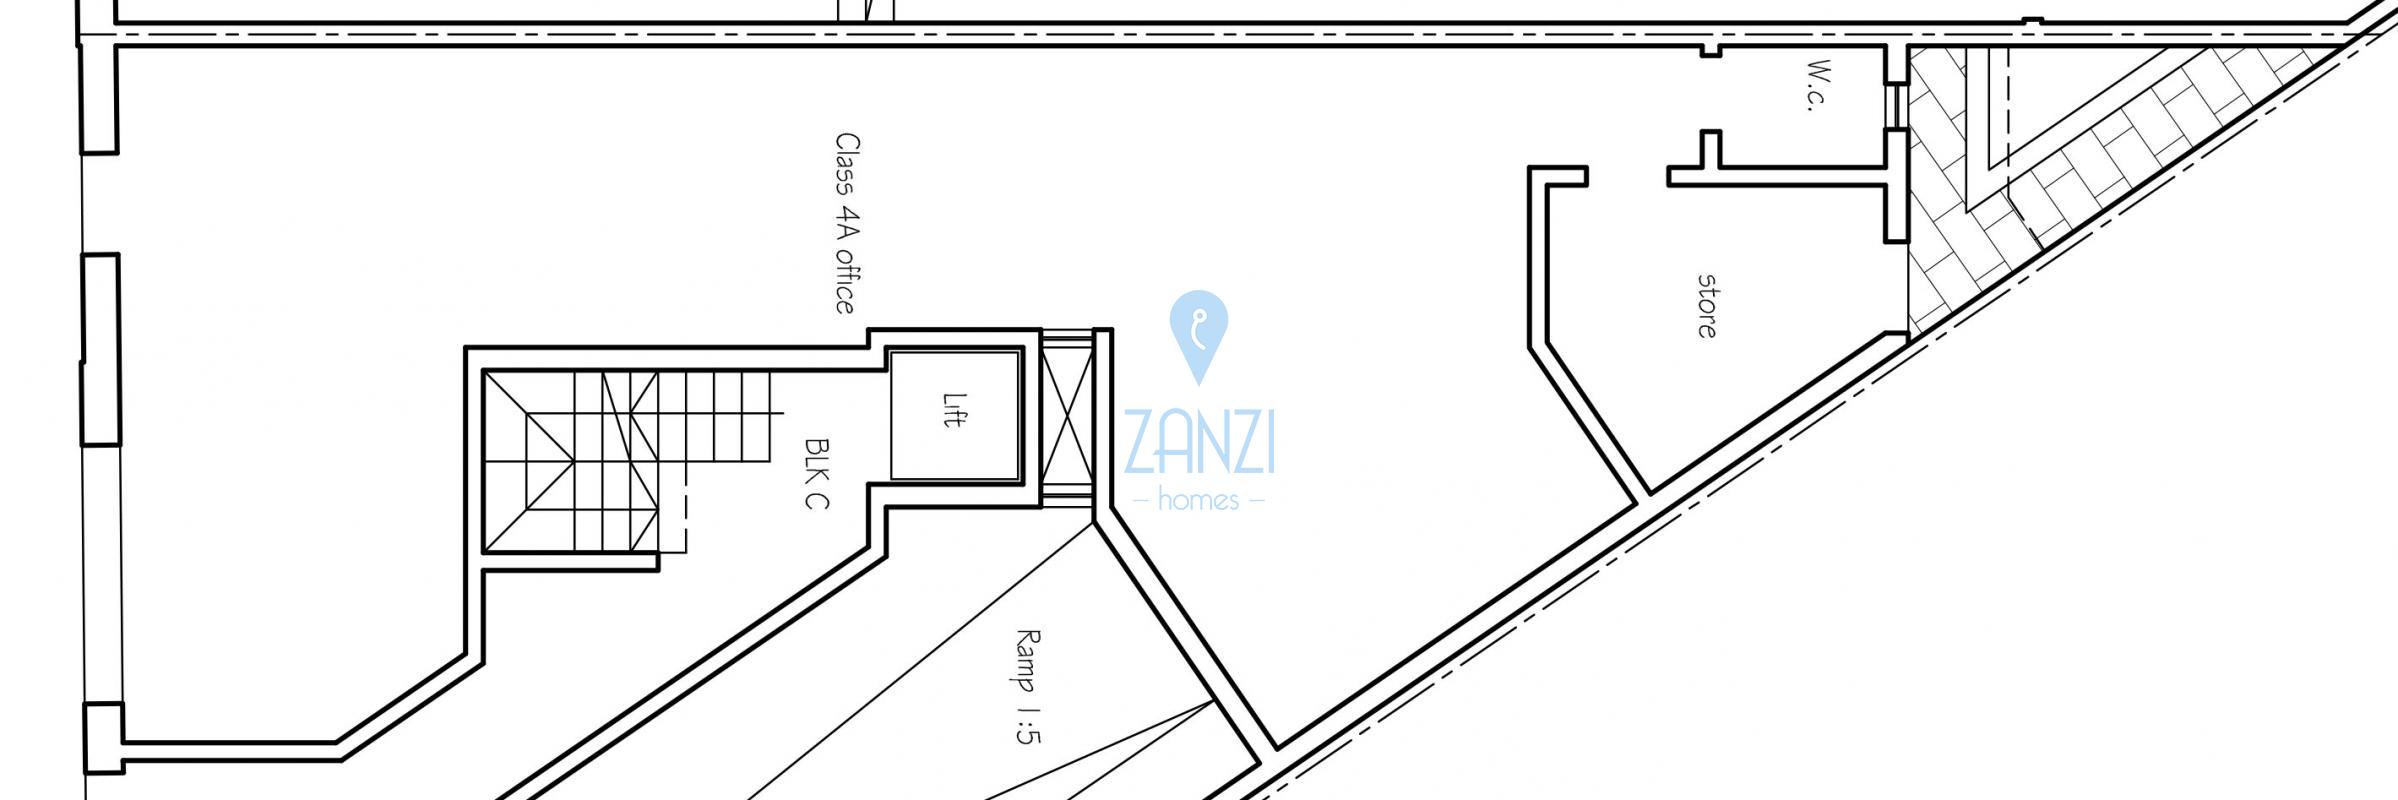 Offices in Gozo - Sannat - REF 33968